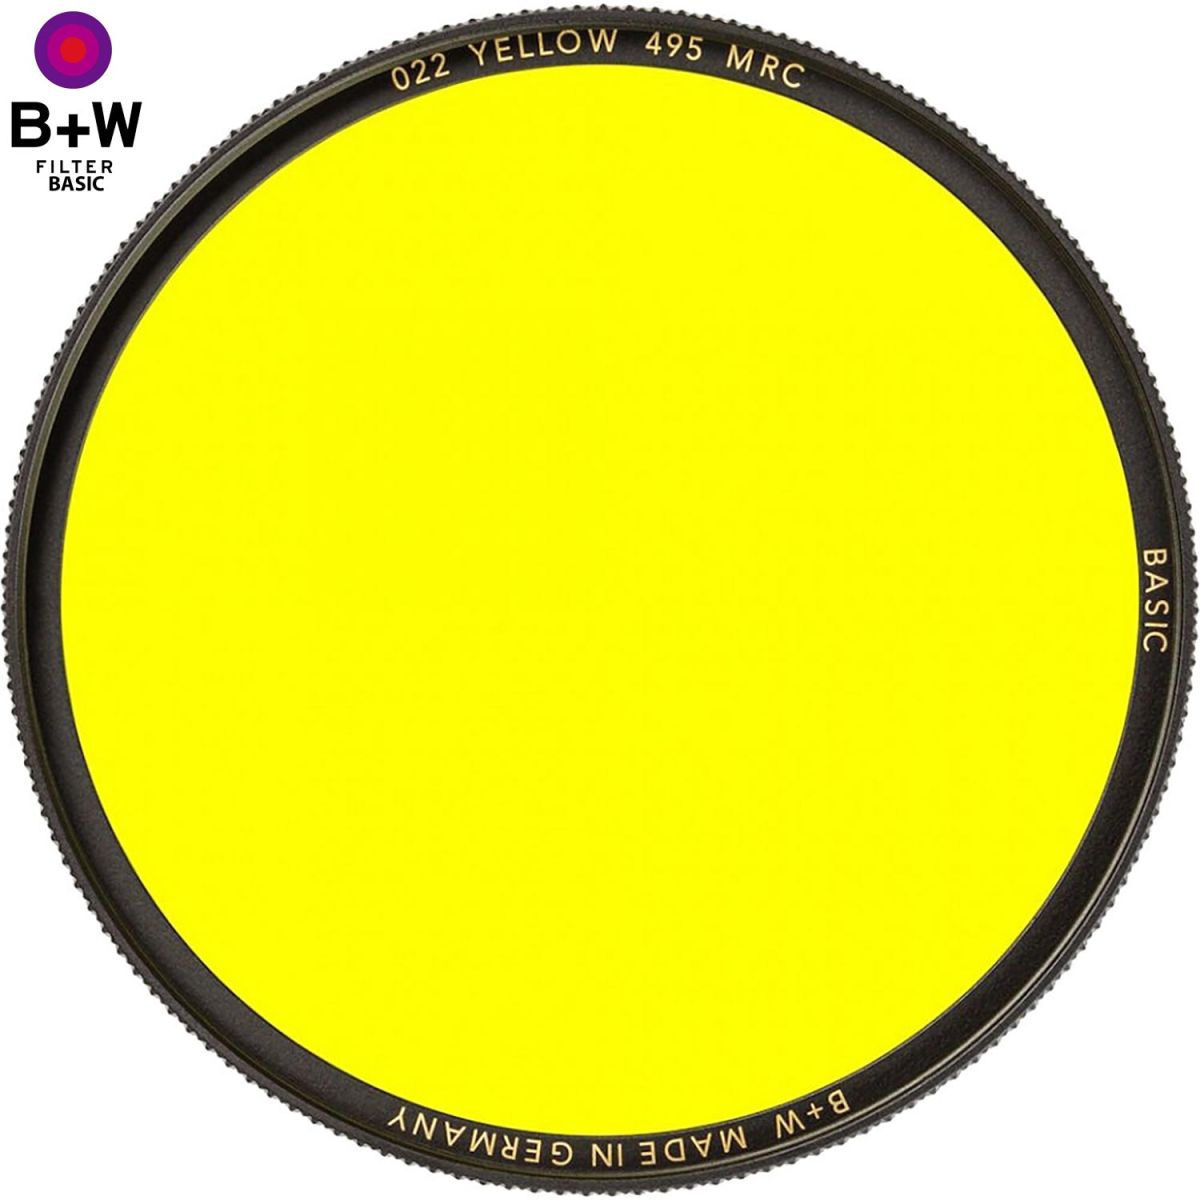 B+W Basic filtre MRC Jaune